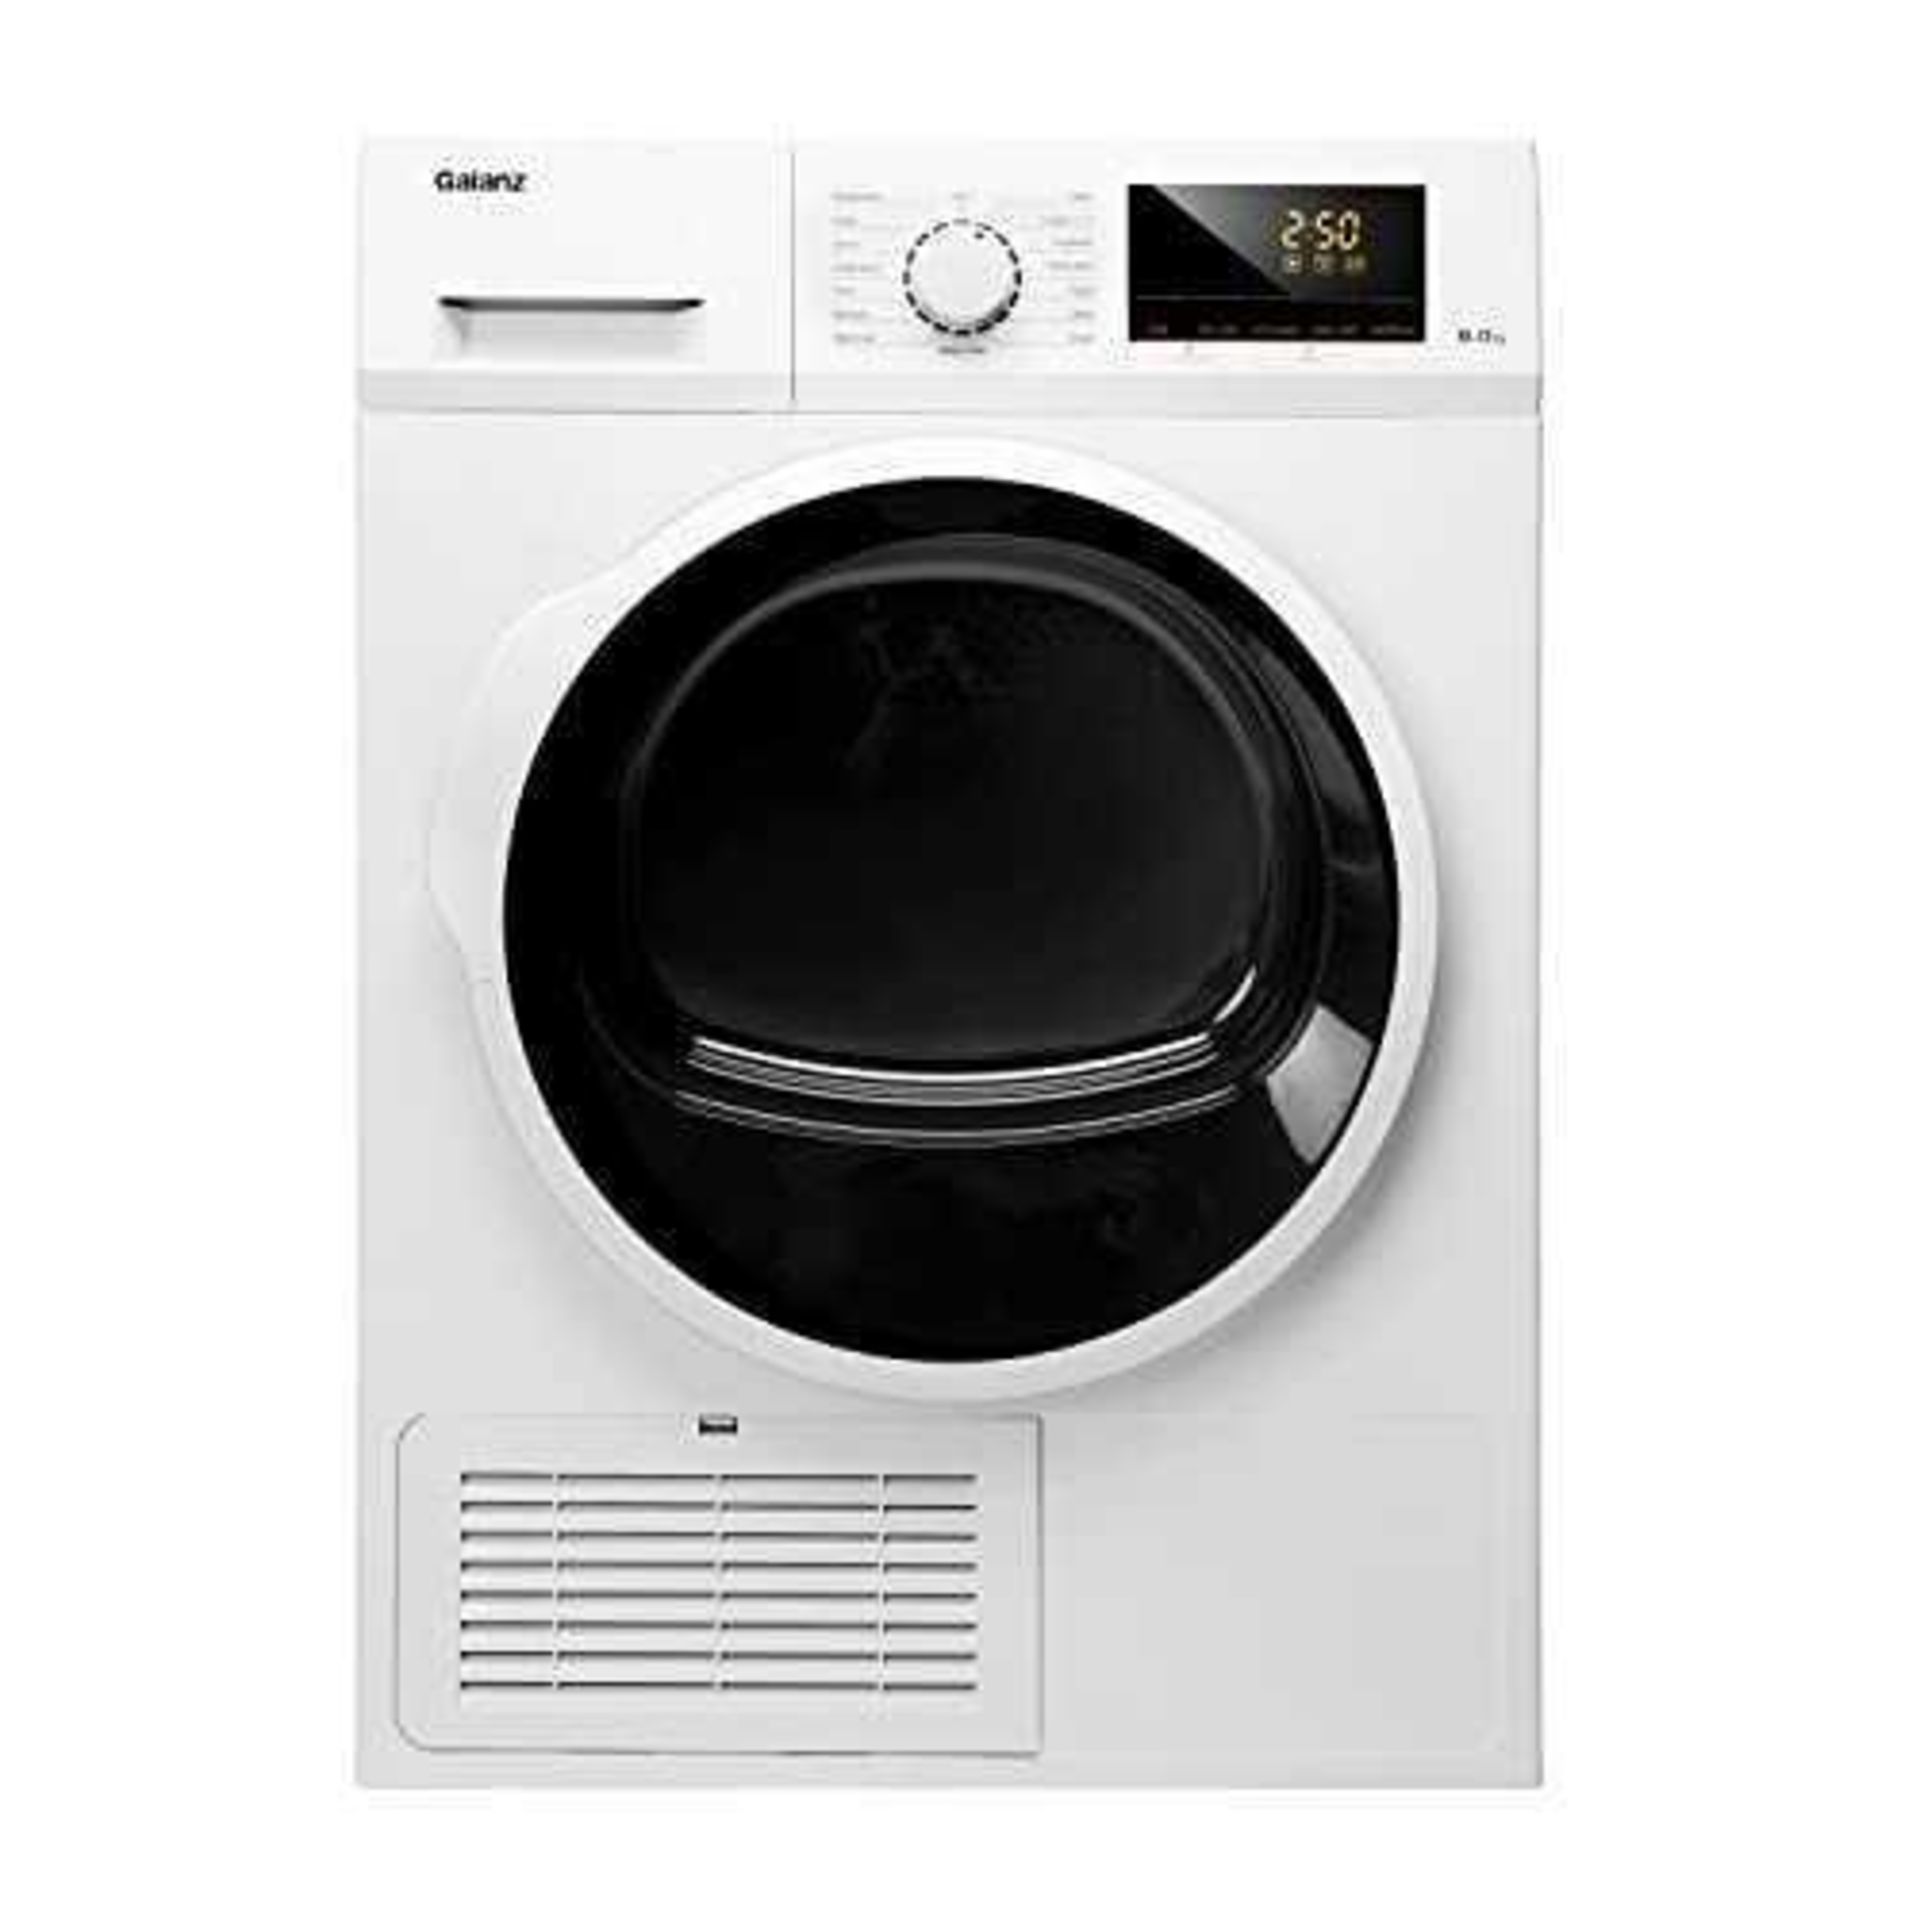 (Dd) RRP £350 Lot To Contain 1Galanz Wmuk002W 9.0Kg Washing Machine Led Display, 15 Programmes, Ener